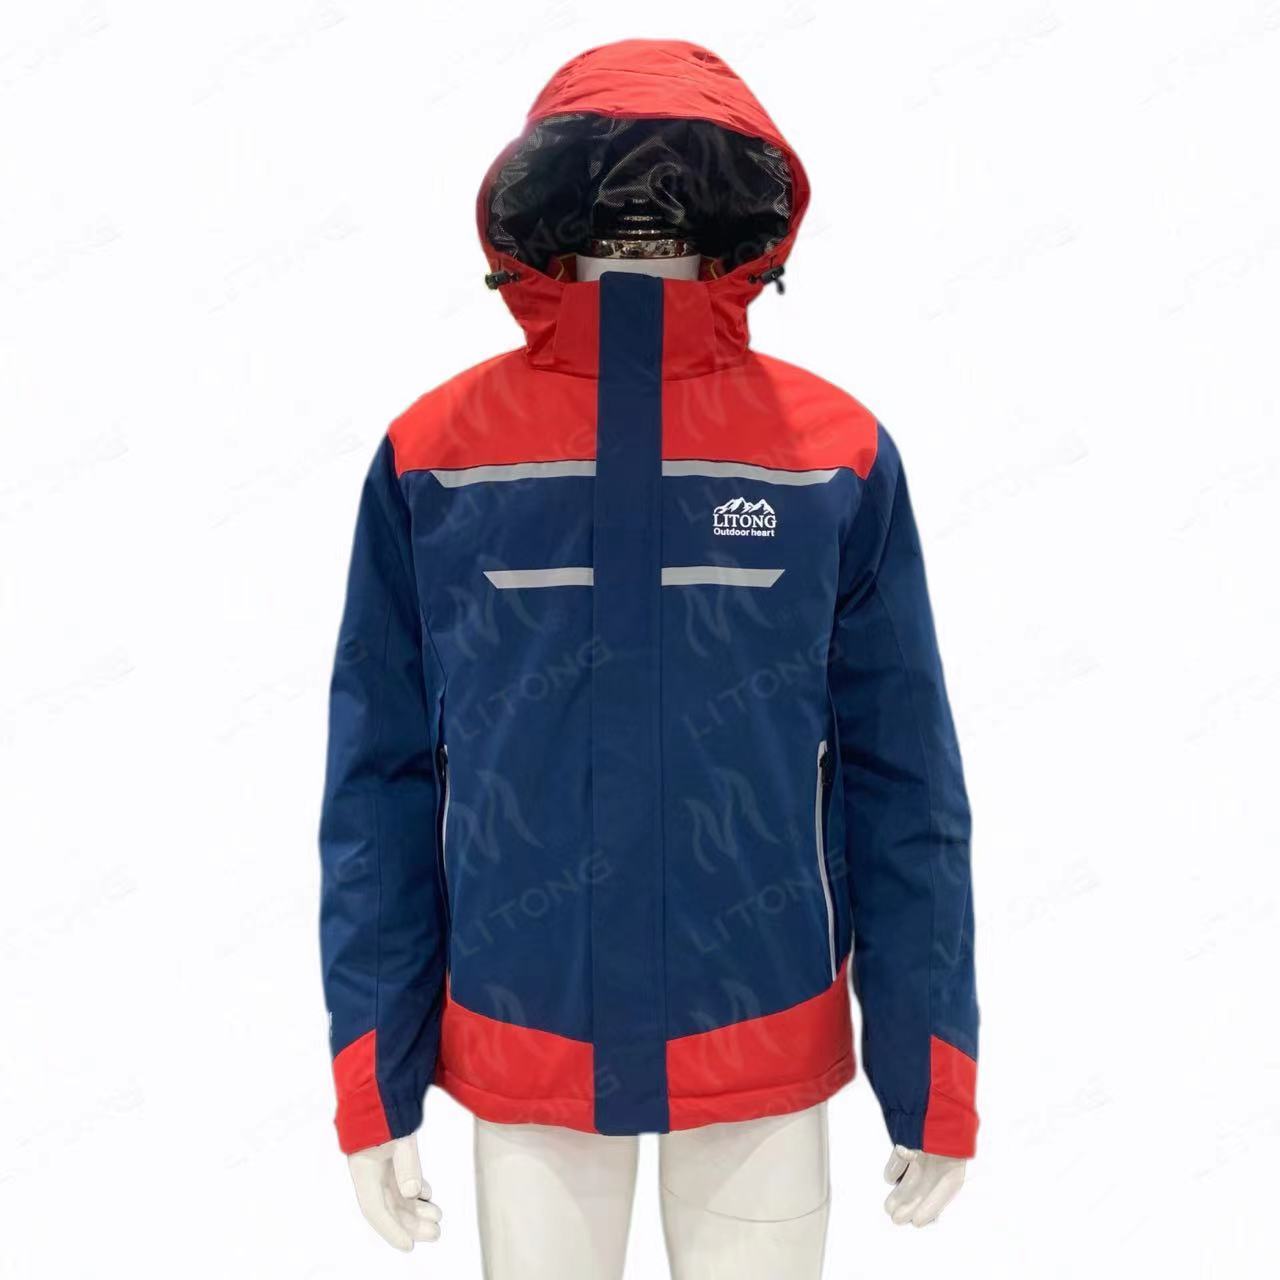 Man winter ski jacket outdoor jacket